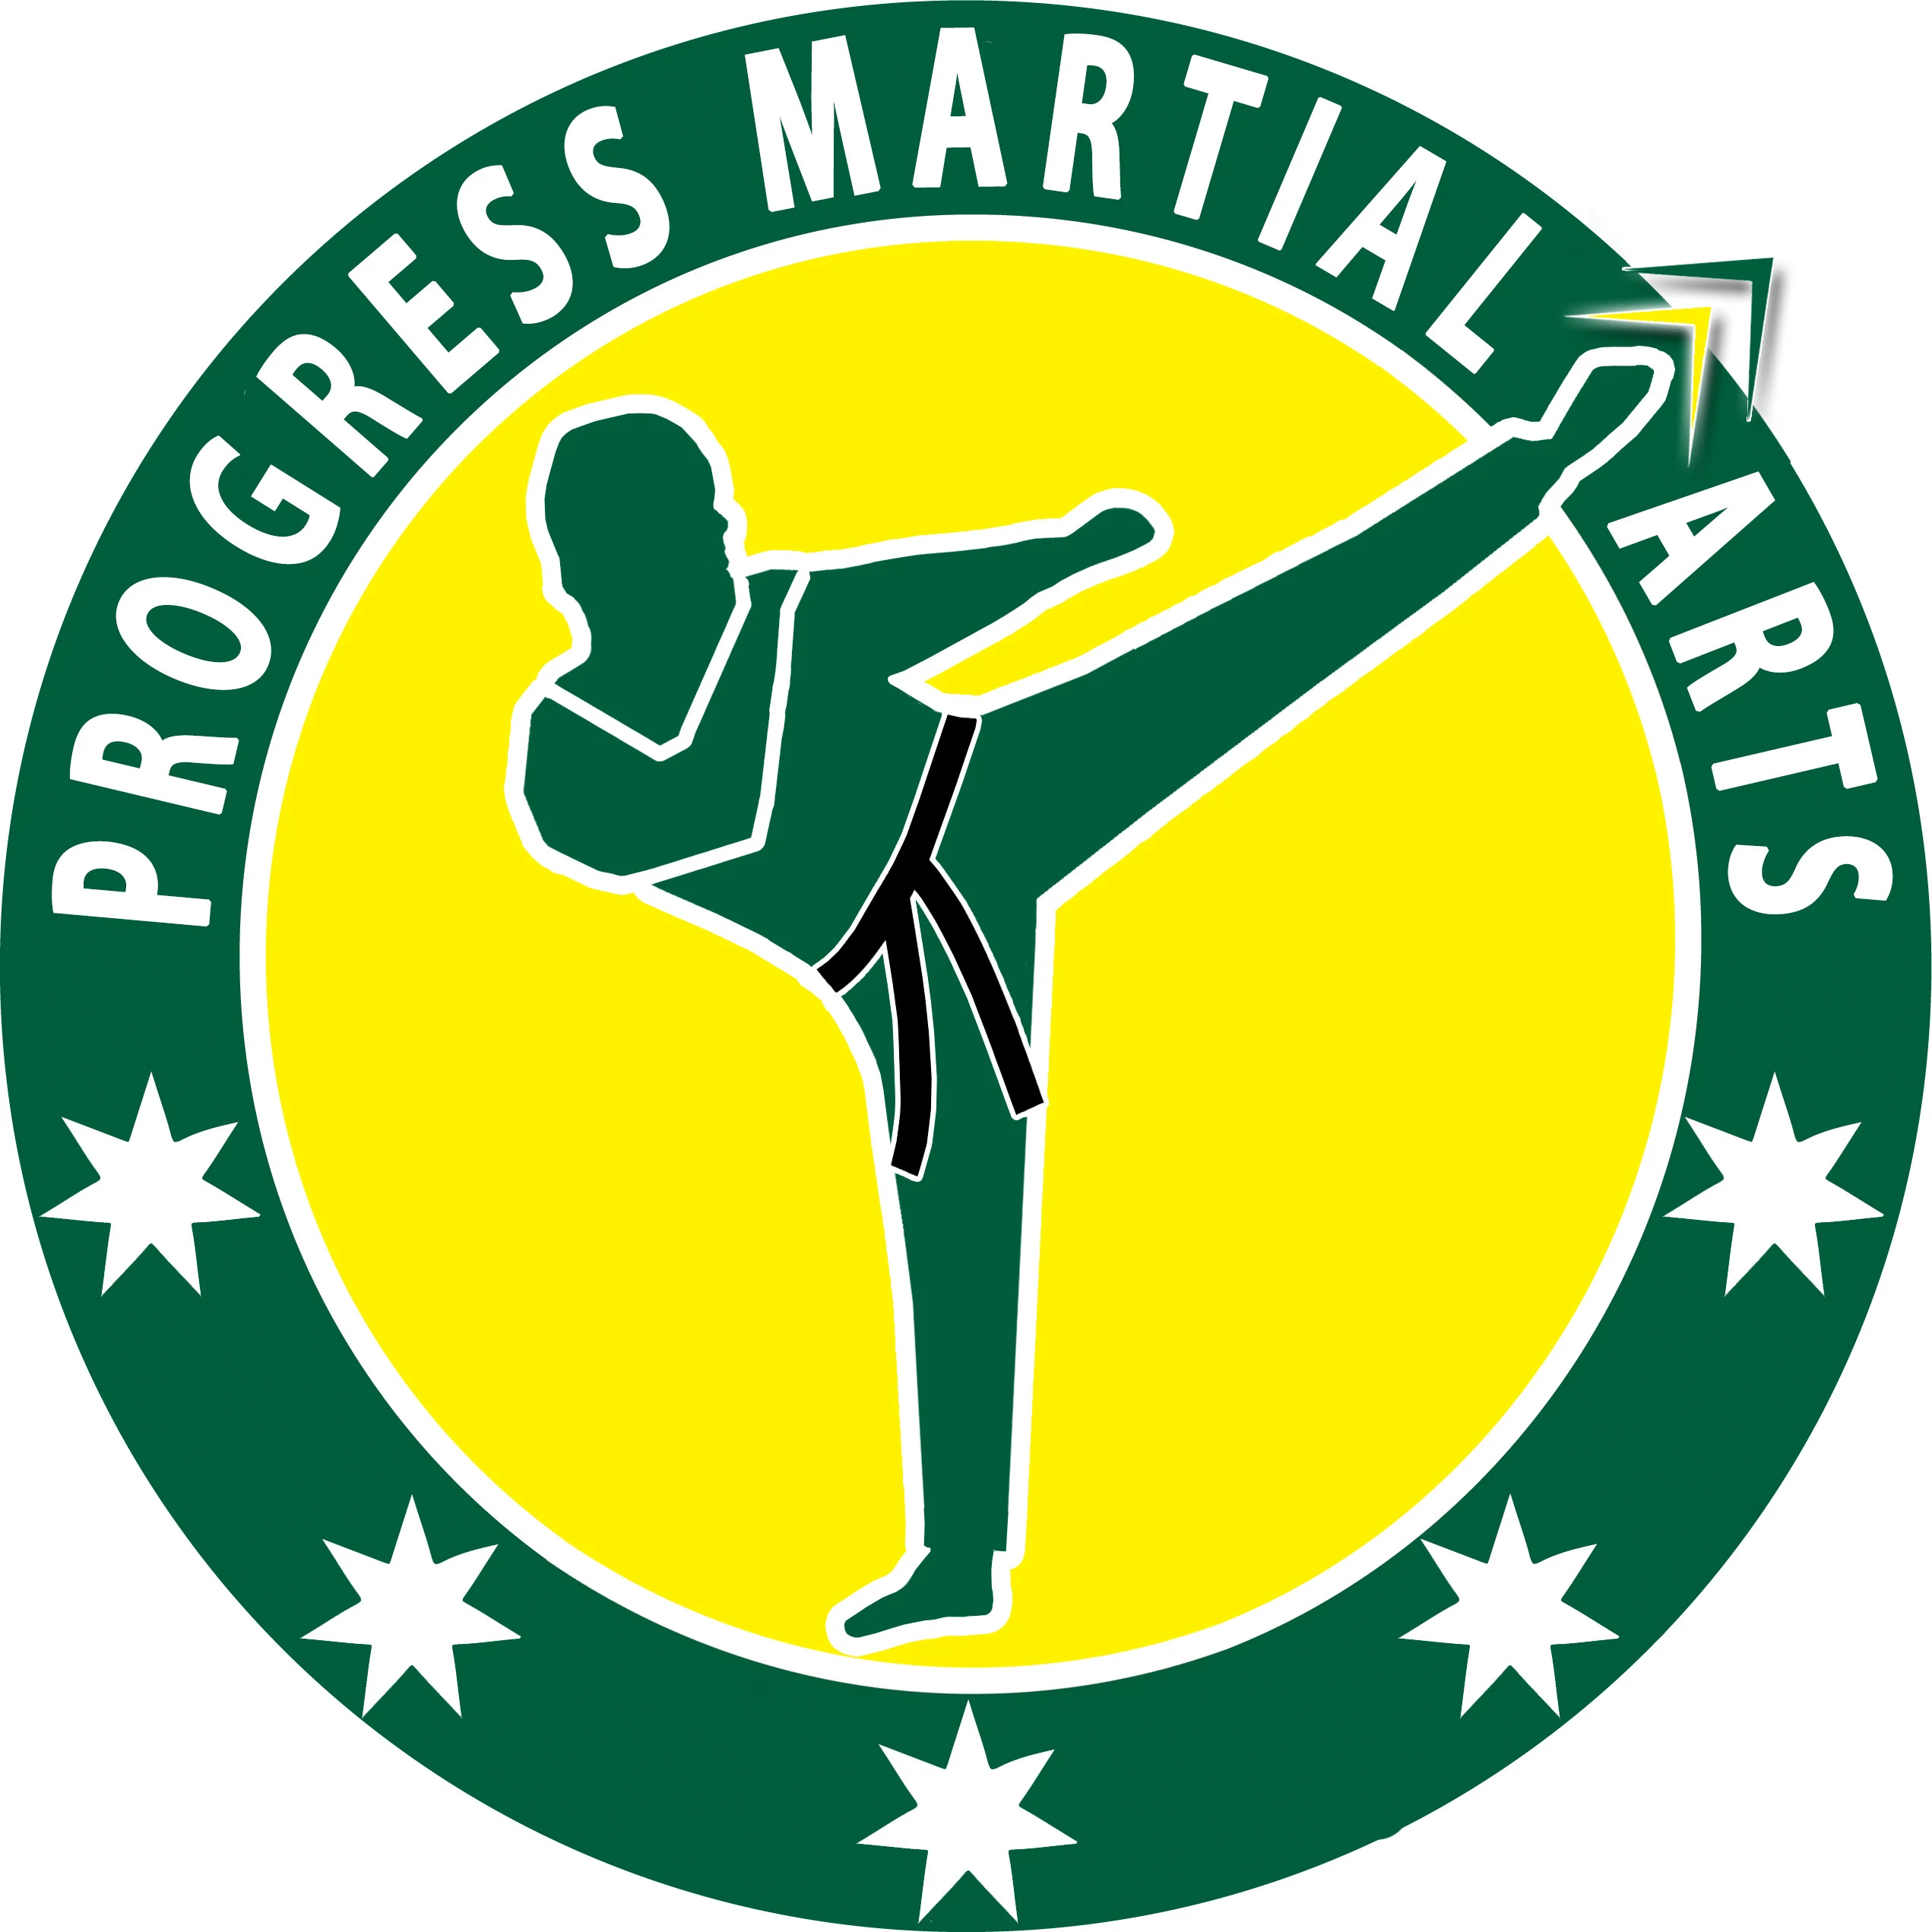 Progress Taekwondo Martial Arts in Craigieburn for Kids & Teens 3-7 Years & 8-15 - Self Defence